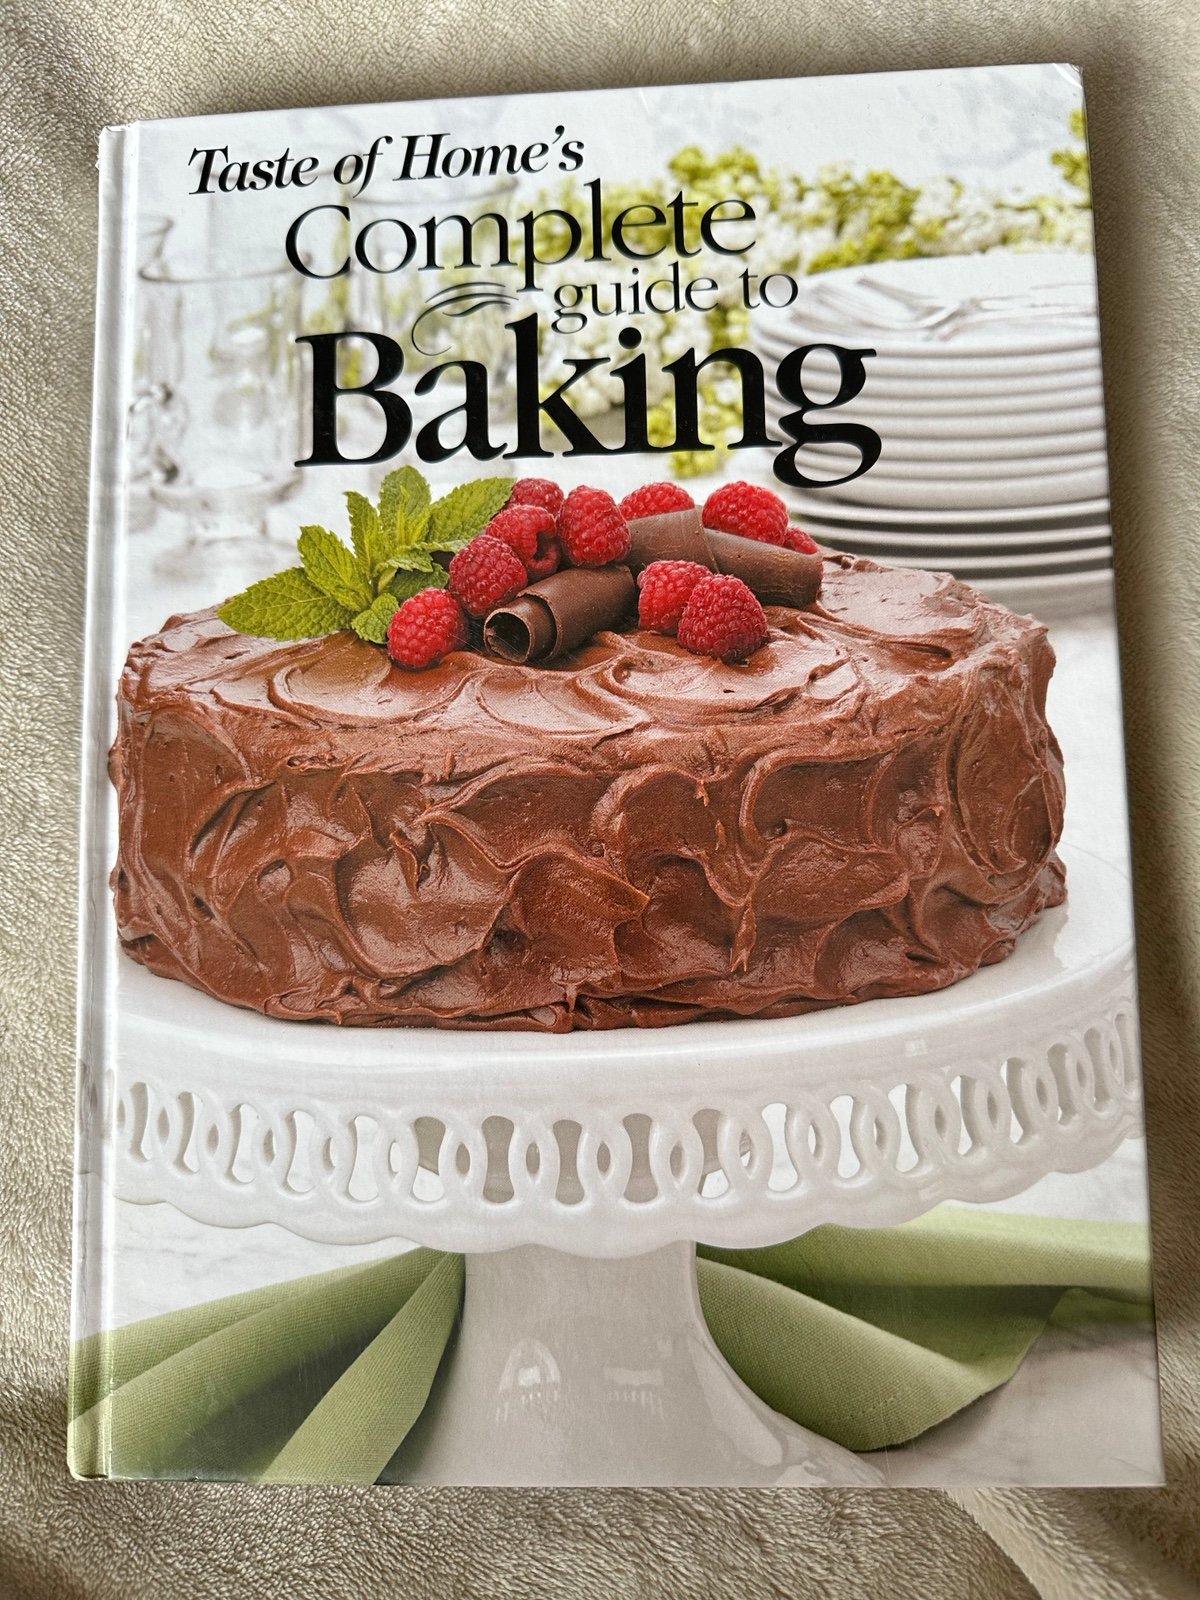 Baking recipe book MkLE4TxbI